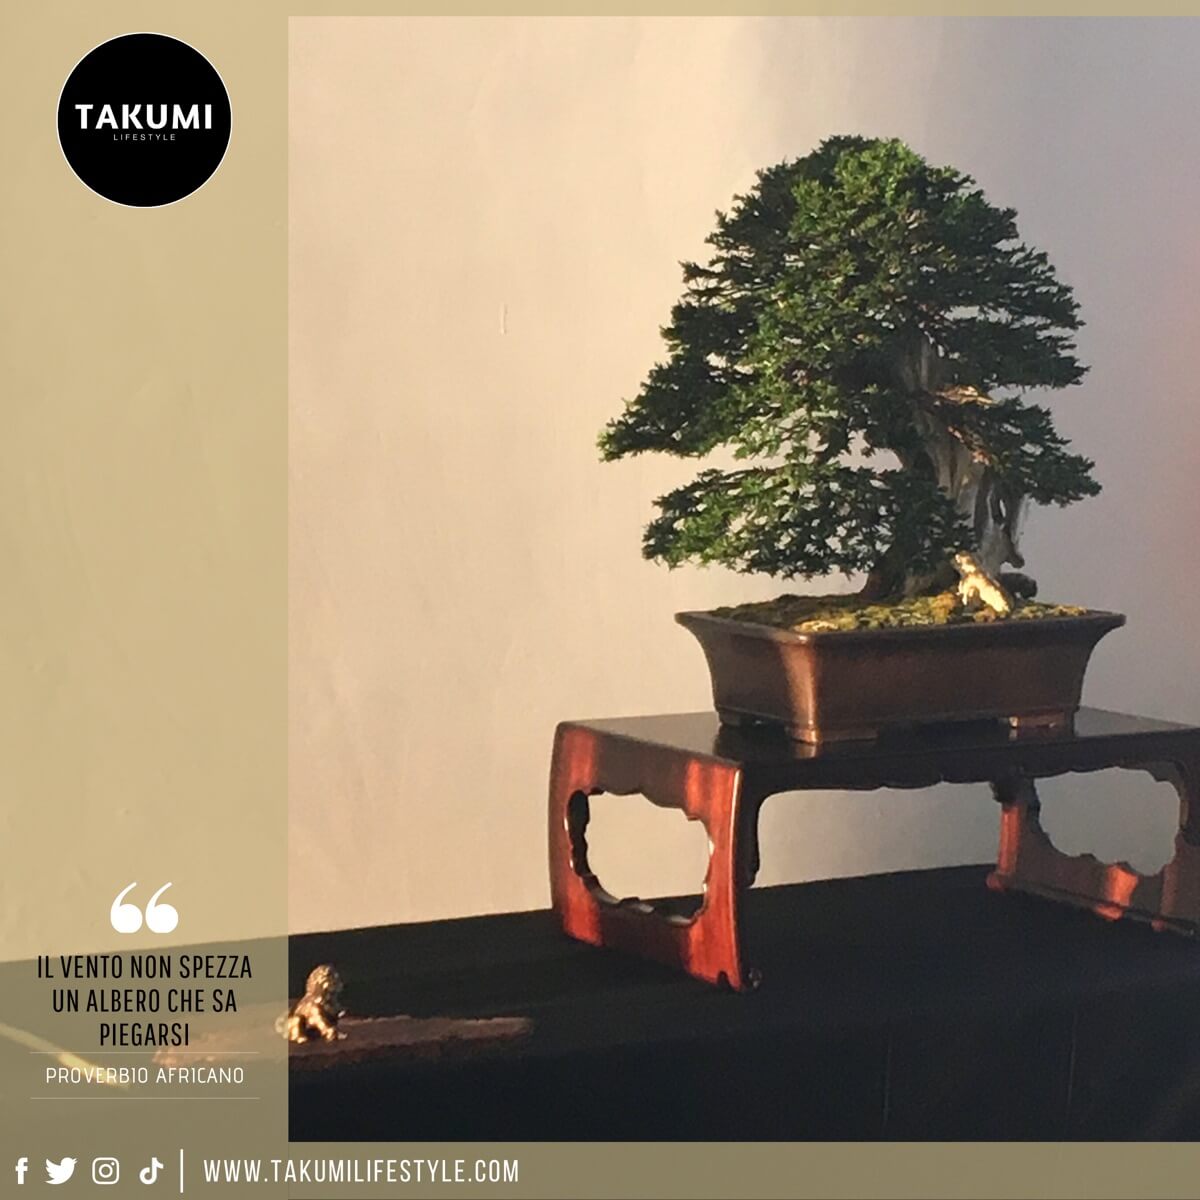 TAKUMI lifestyle quote #48 - Tasso bonsai - Emilio Capozza